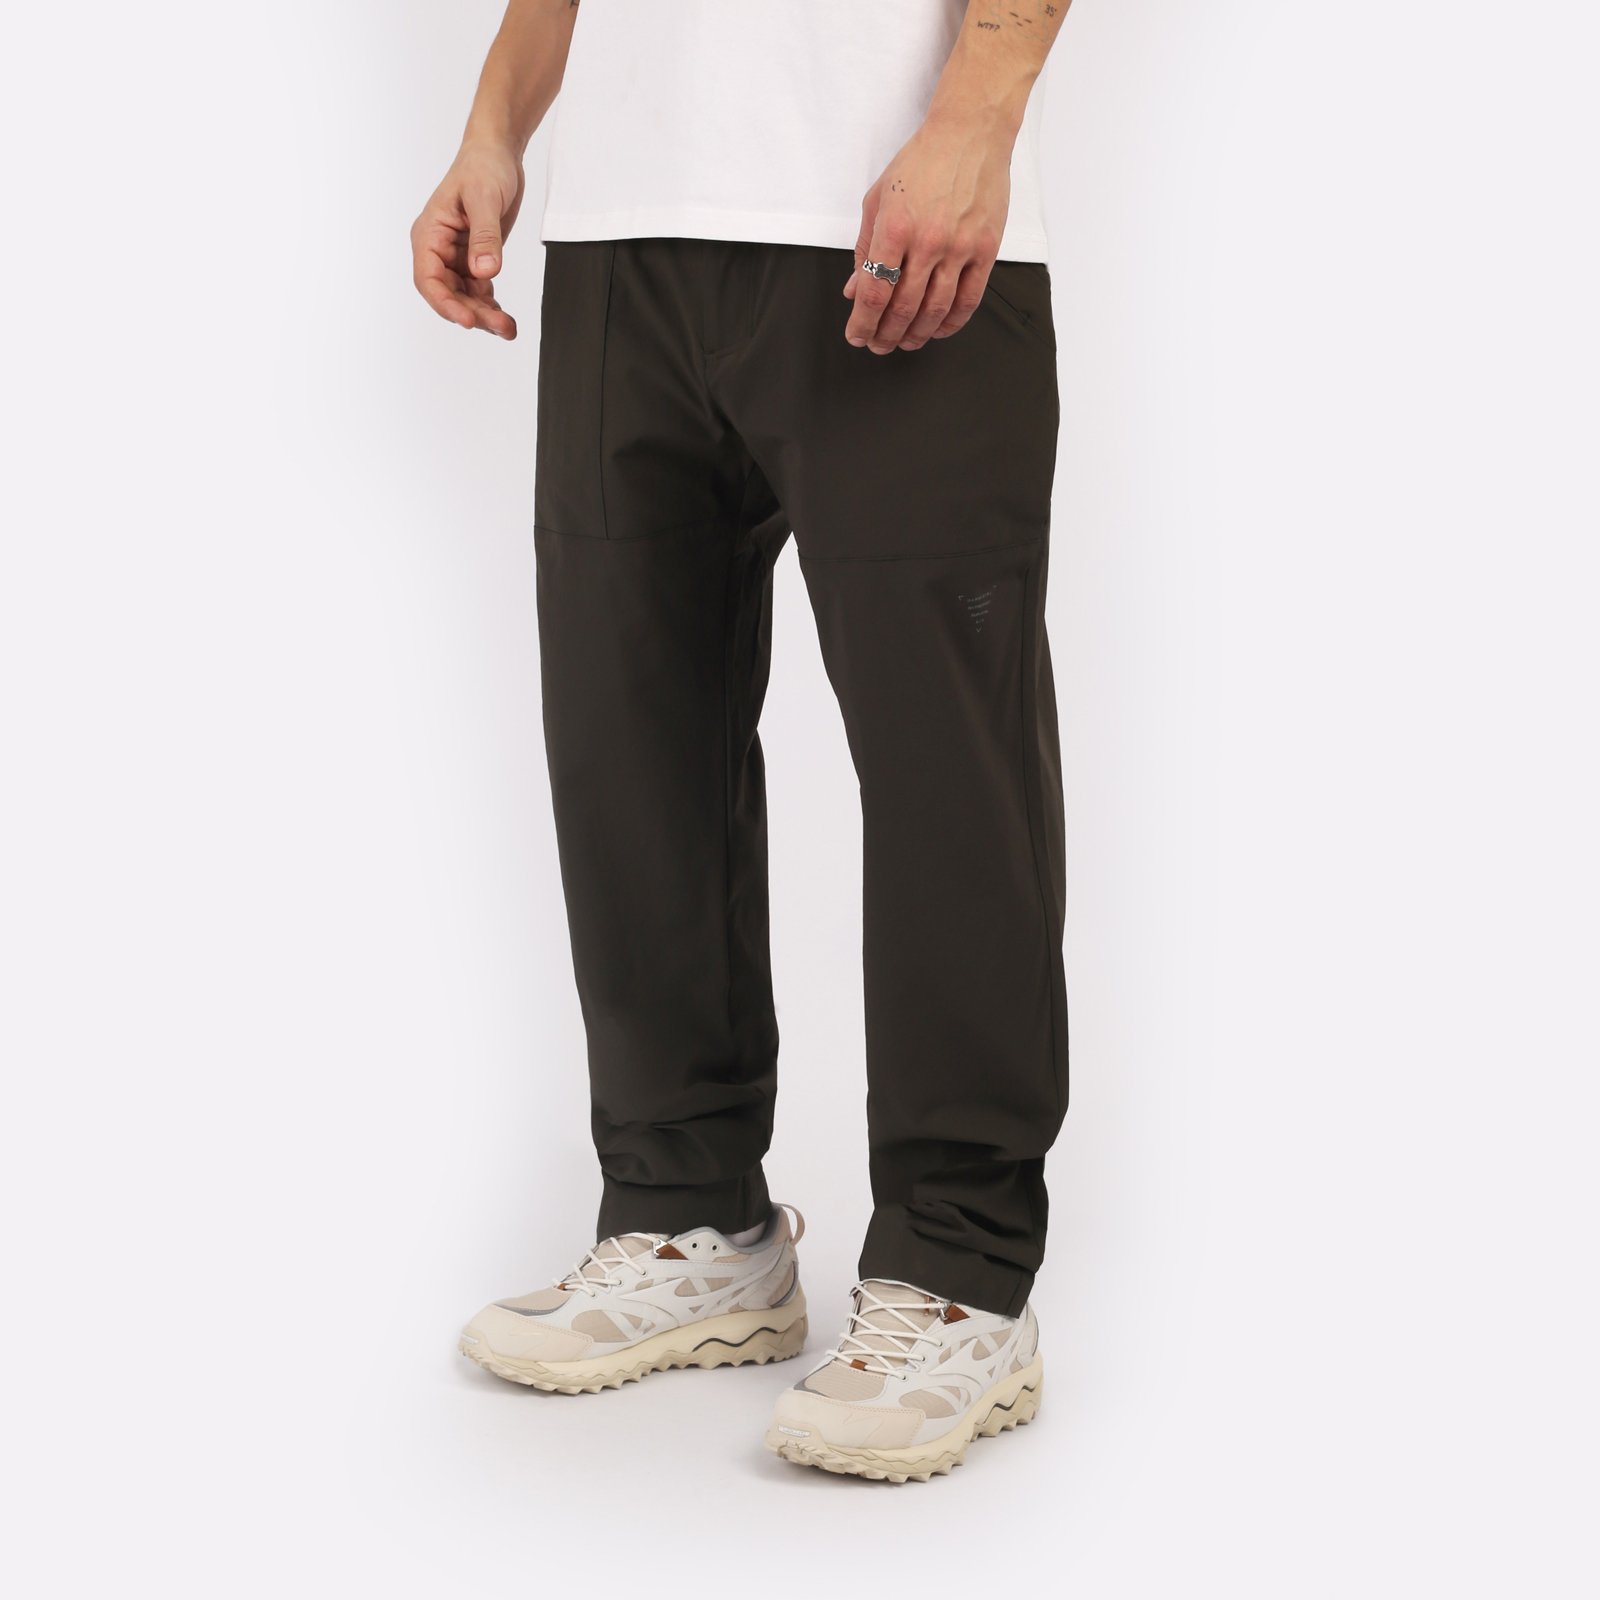 мужские зеленые брюки KRAKATAU Rm180-5 Rm180-5-тем-зел - цена, описание, фото 3